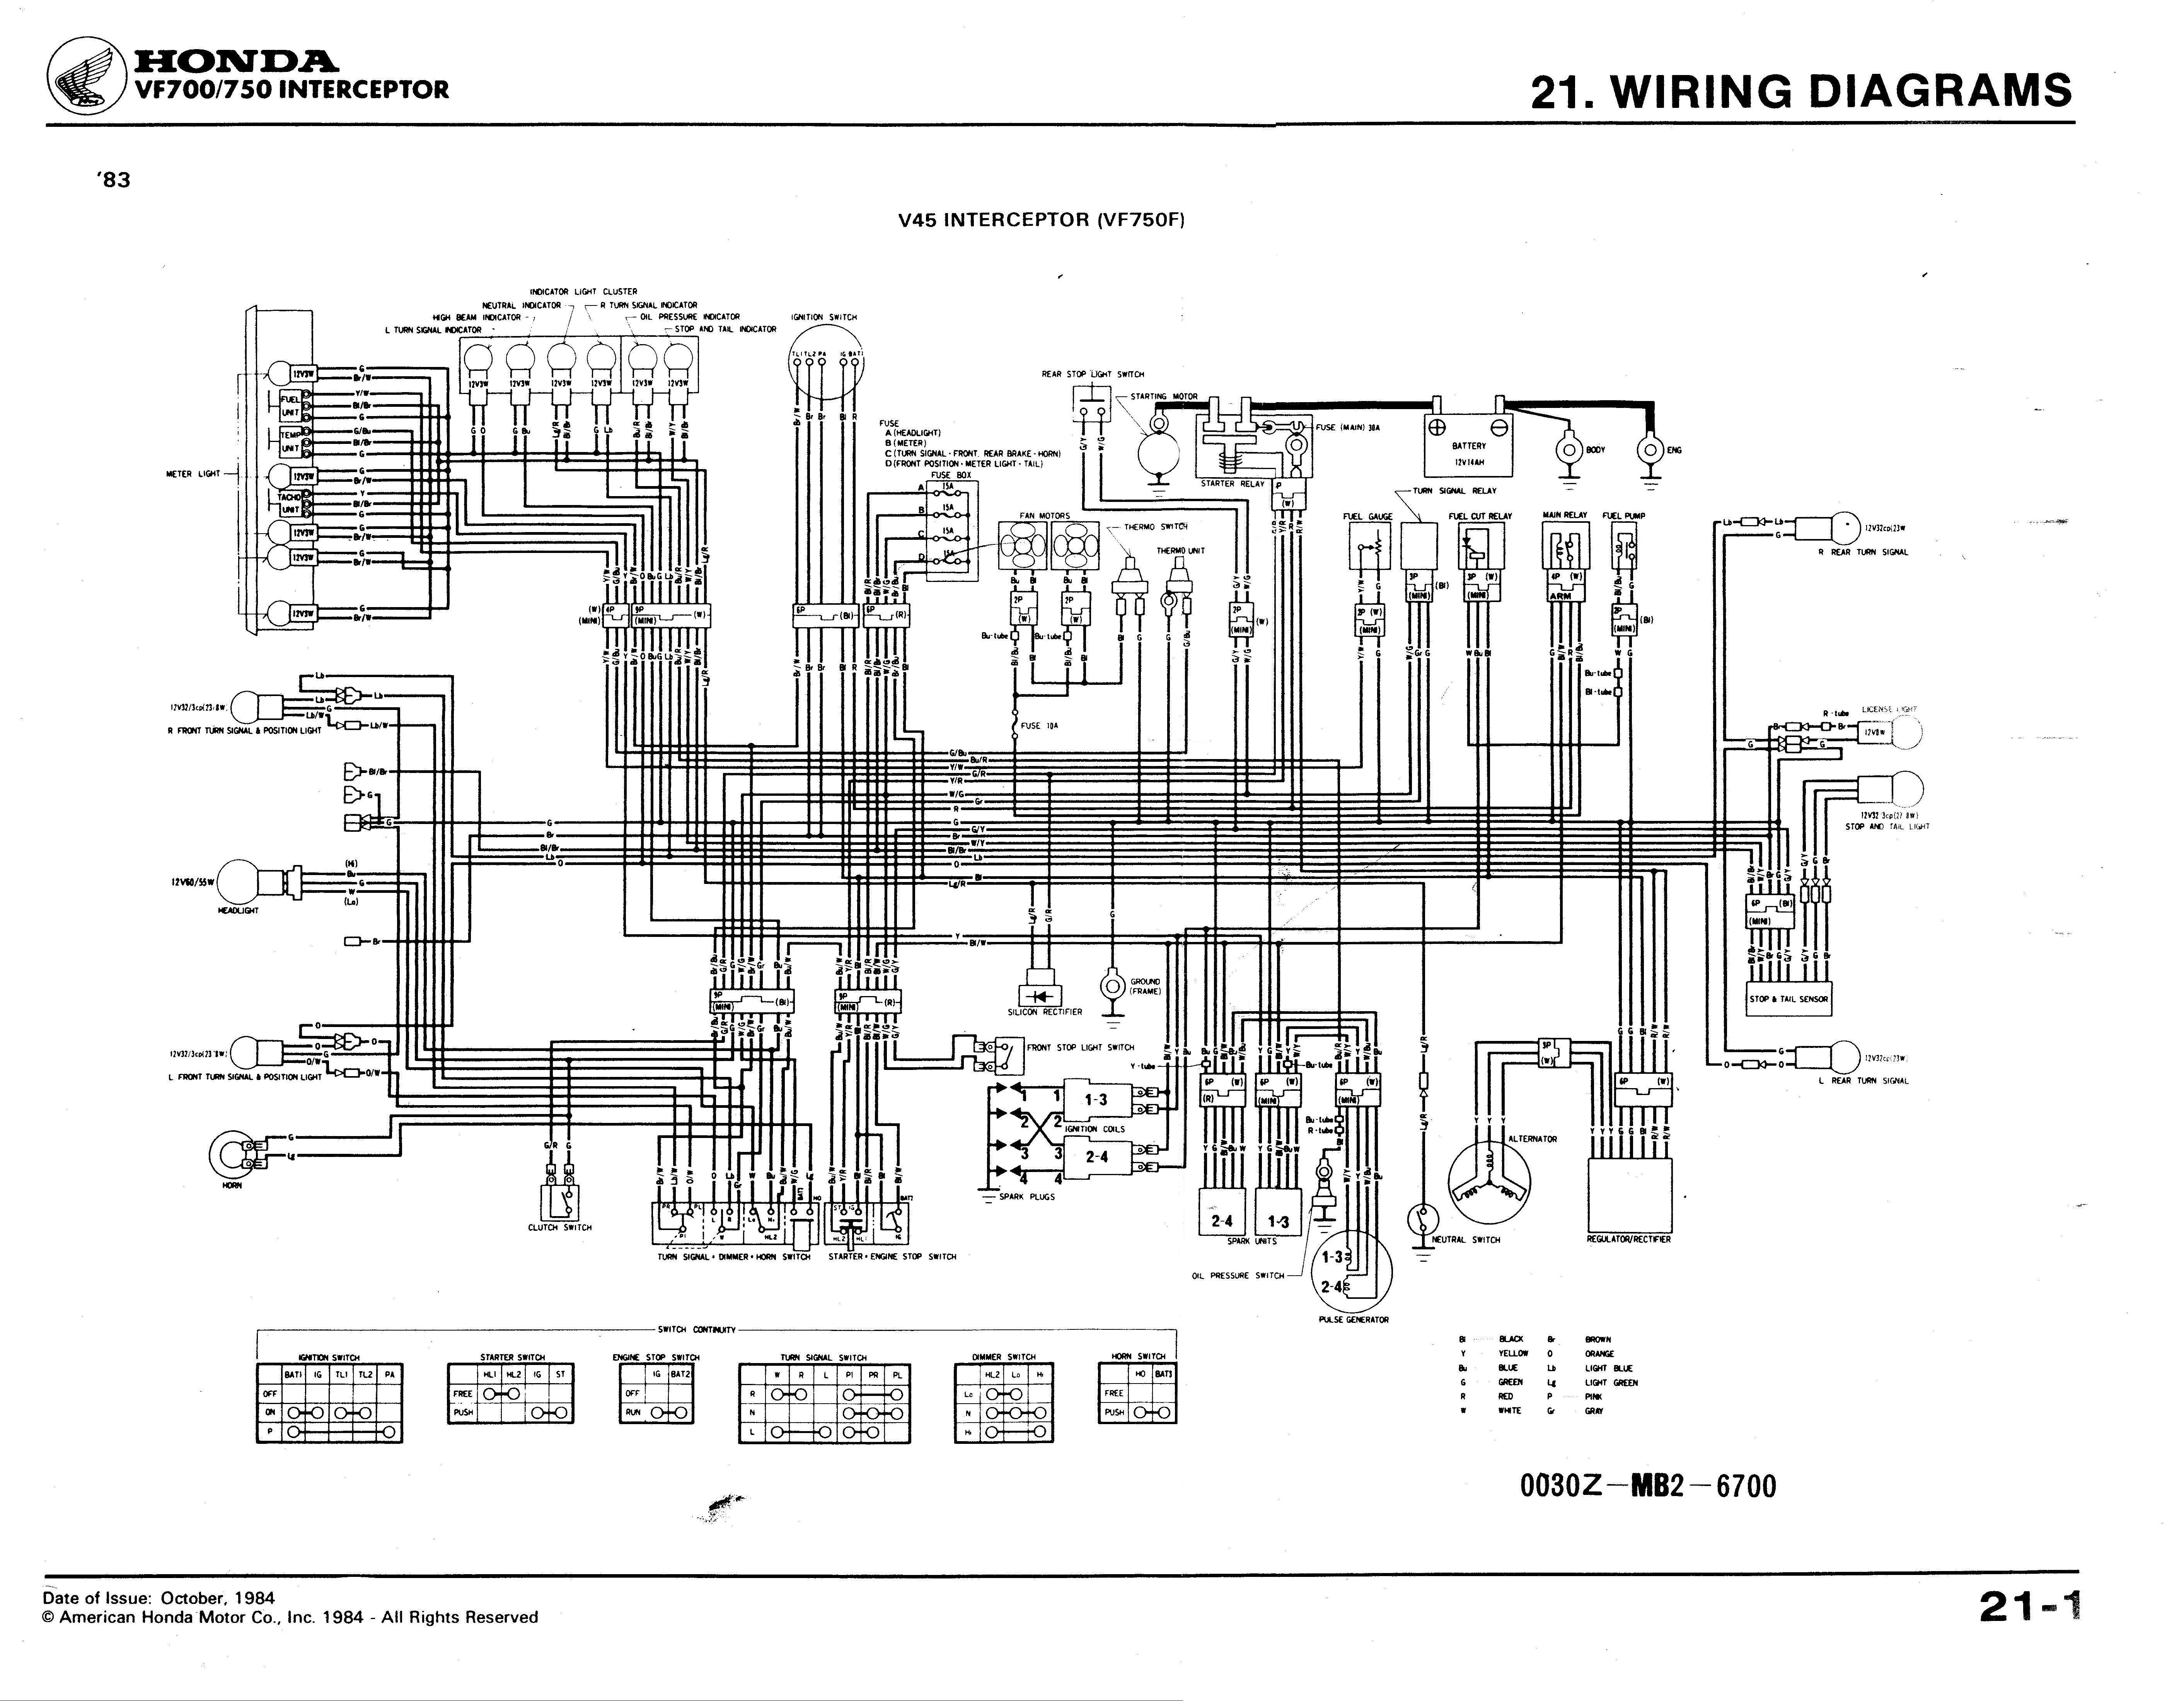 1983 Honda Shadow 750 Wiring Diagram Wiring Diagrams Of 1983 Honda Shadow 750 Wiring Diagram